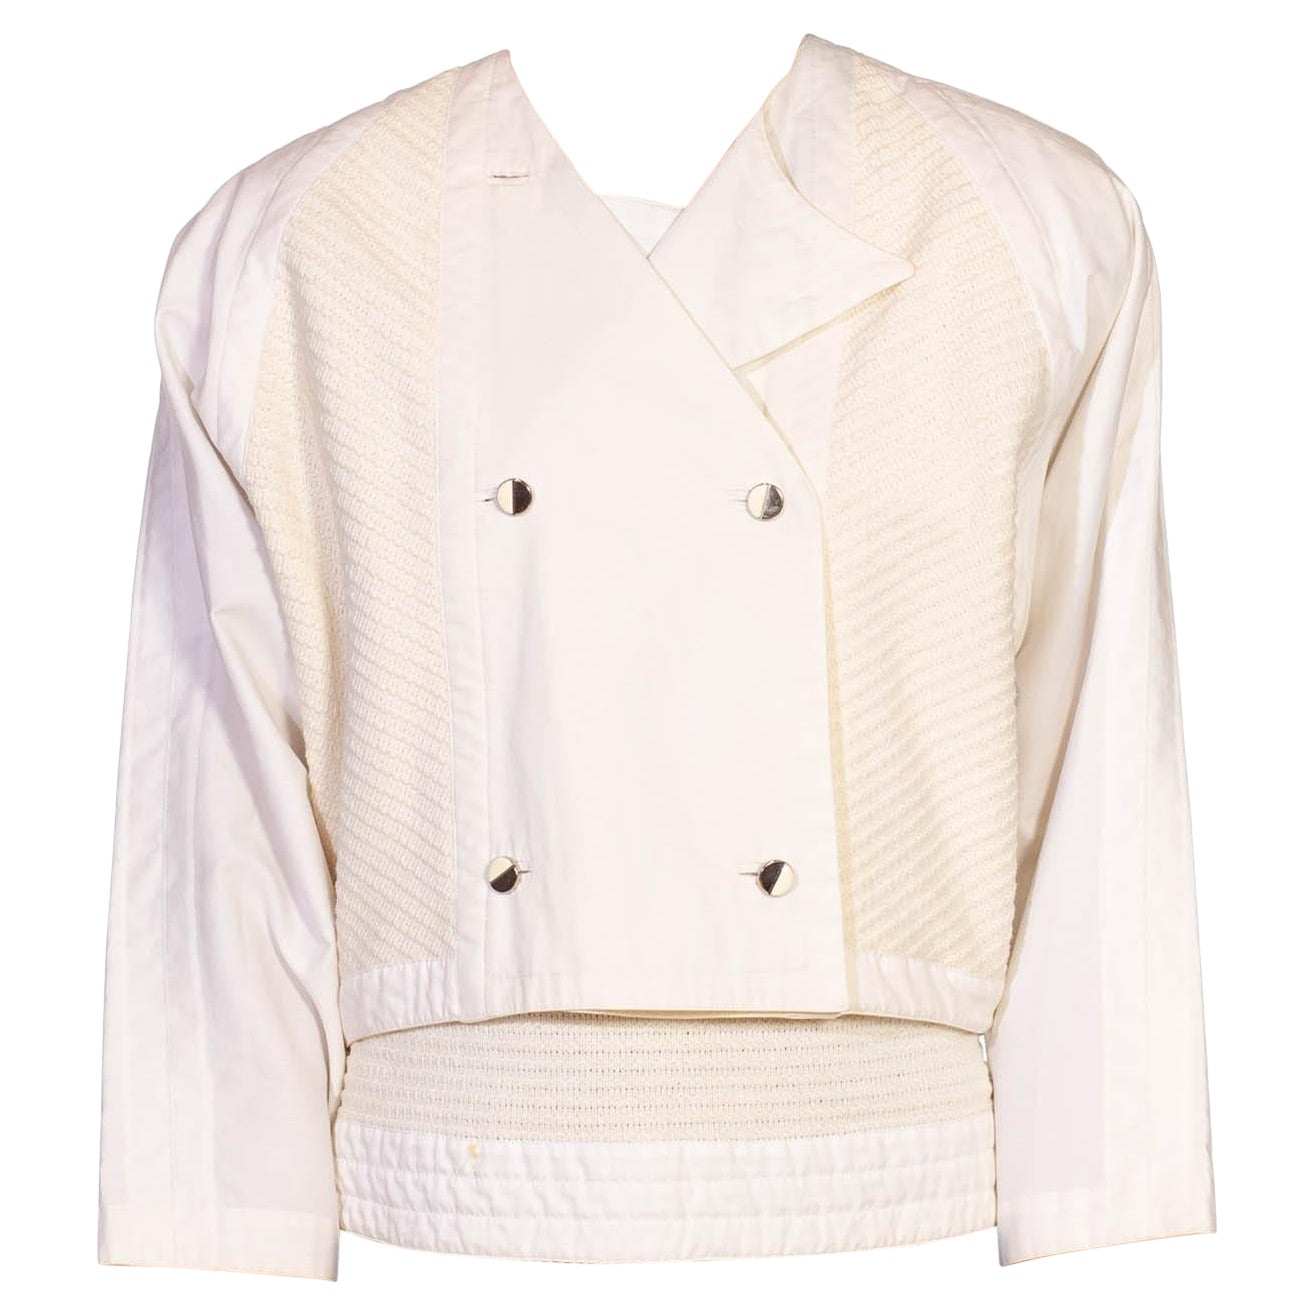 1980S Gianni Versace White Cotton Textured Top & Jacket Ensemble For Sale